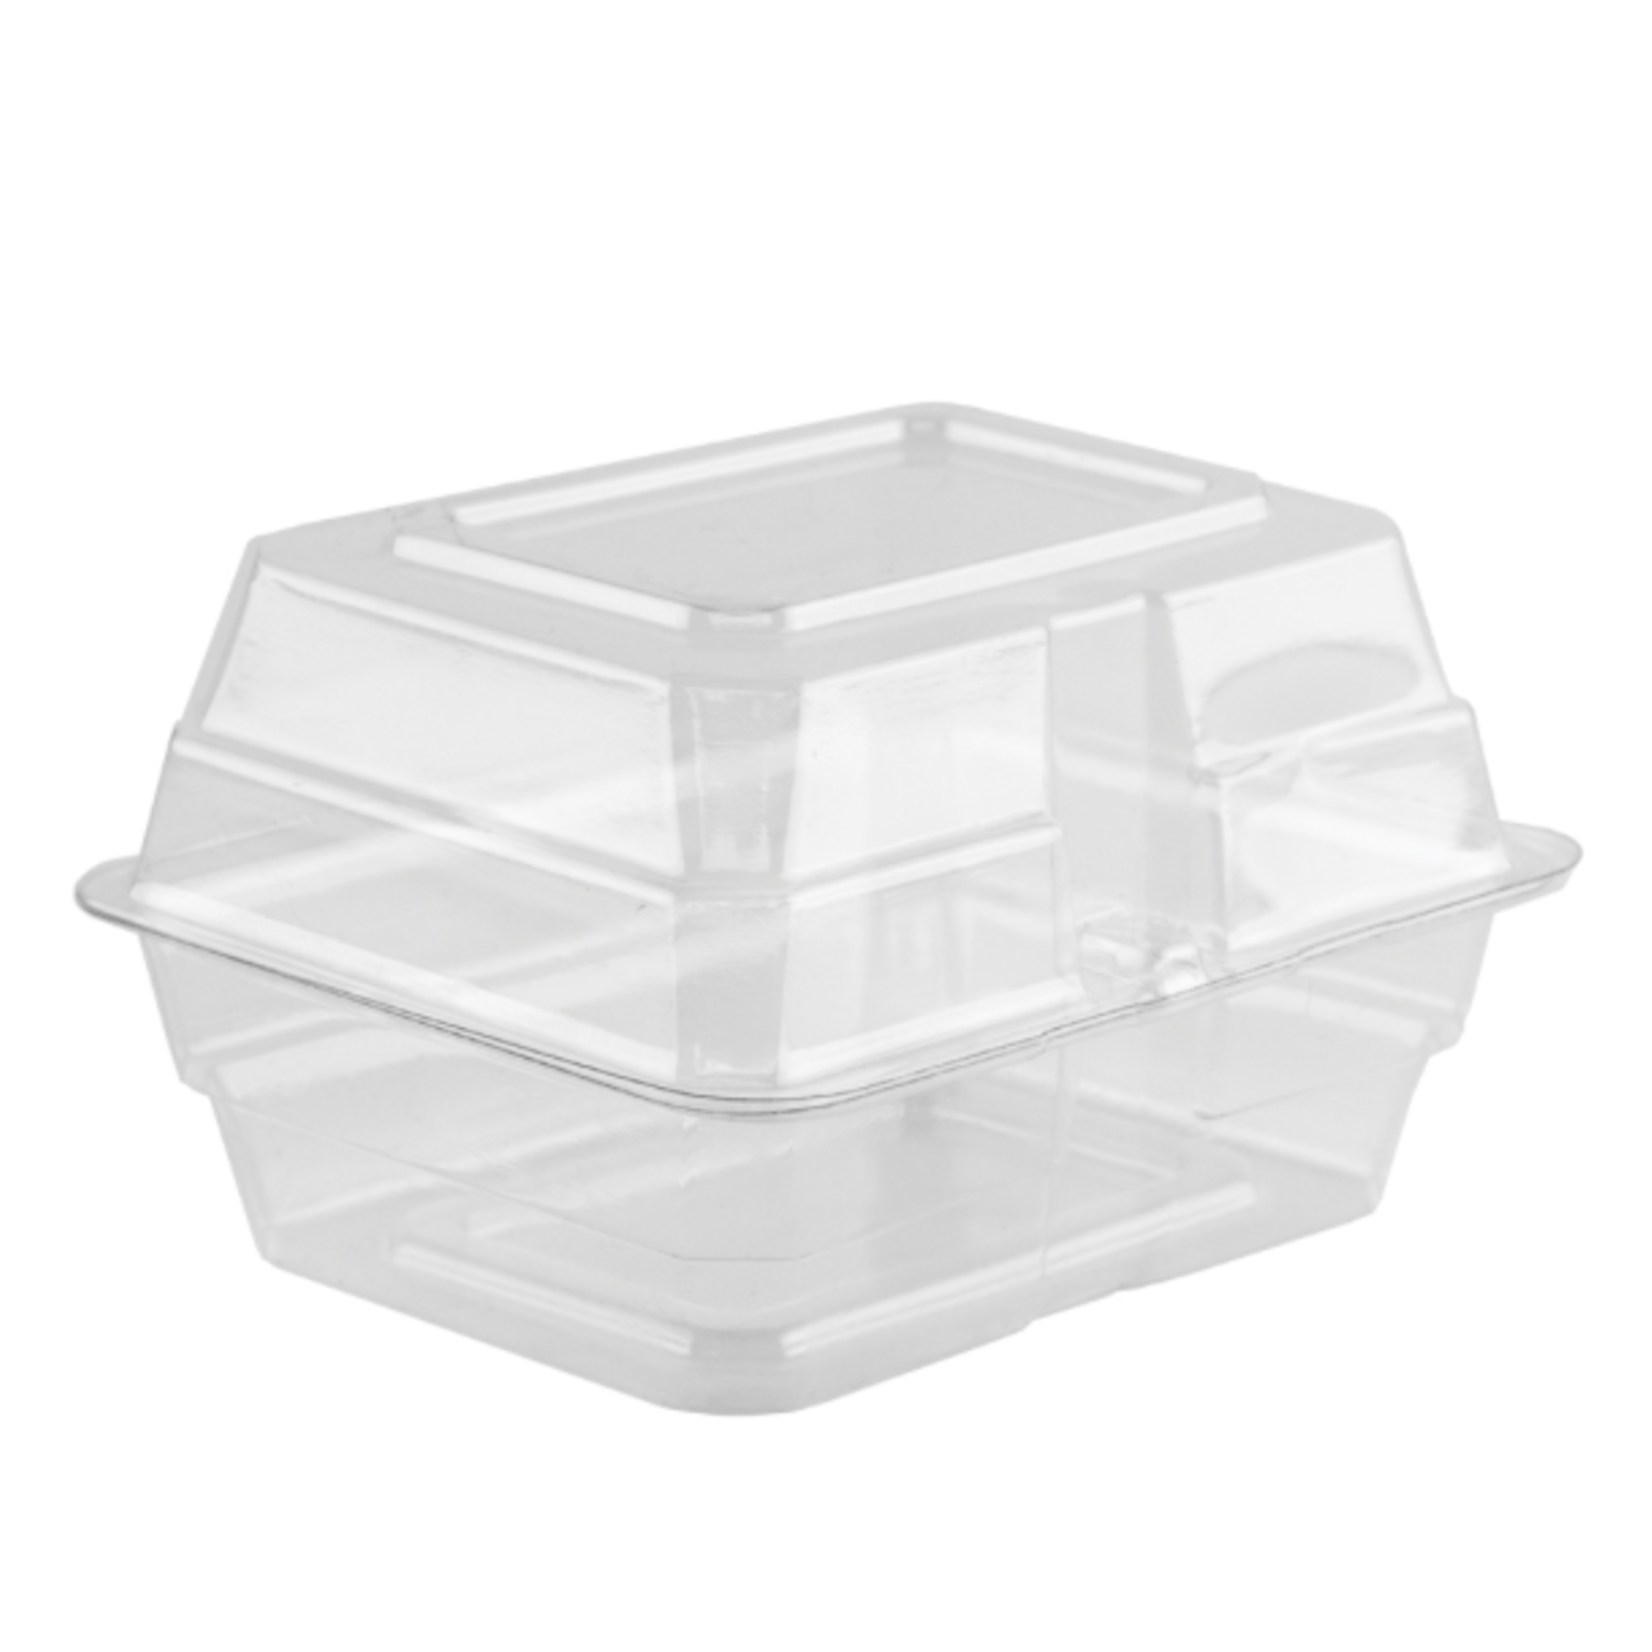 5"x4"x3" Boutonniere Box - Crystal